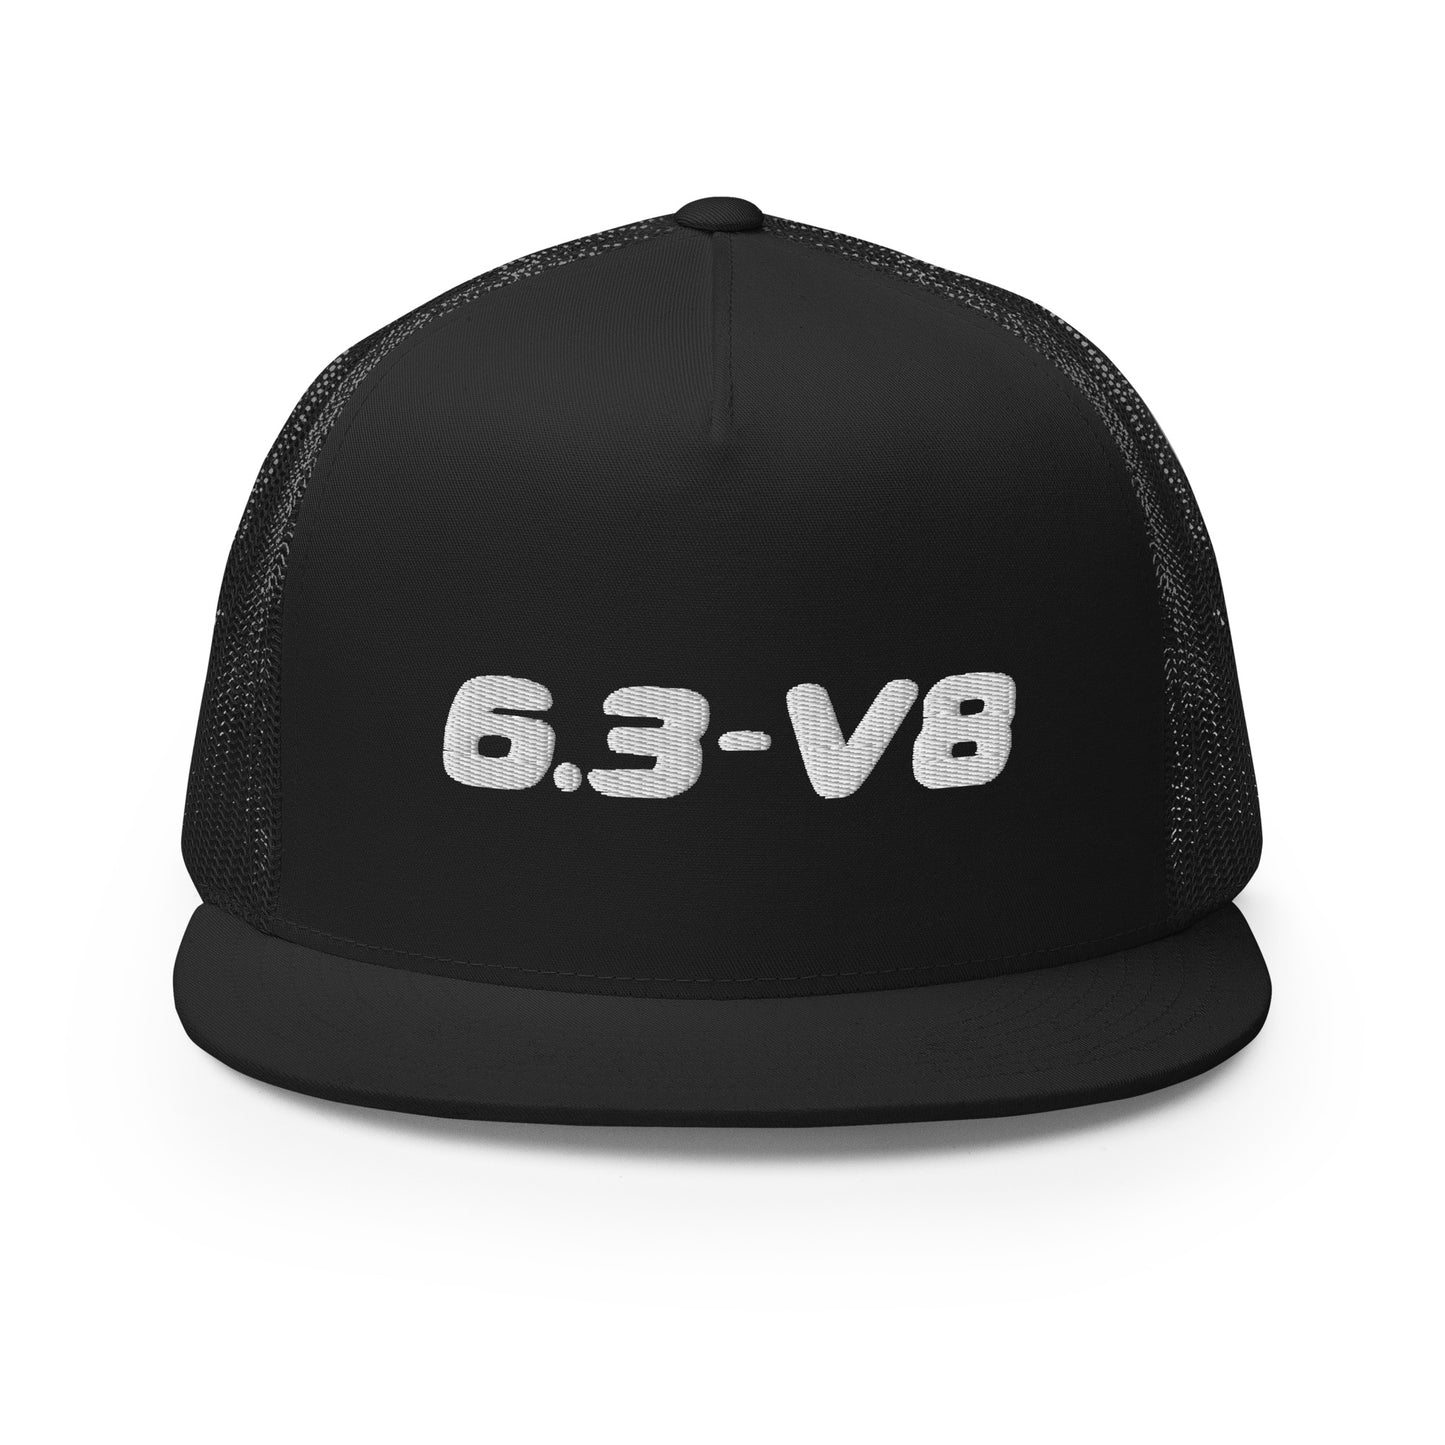 6.3 V8 Trucker Hat